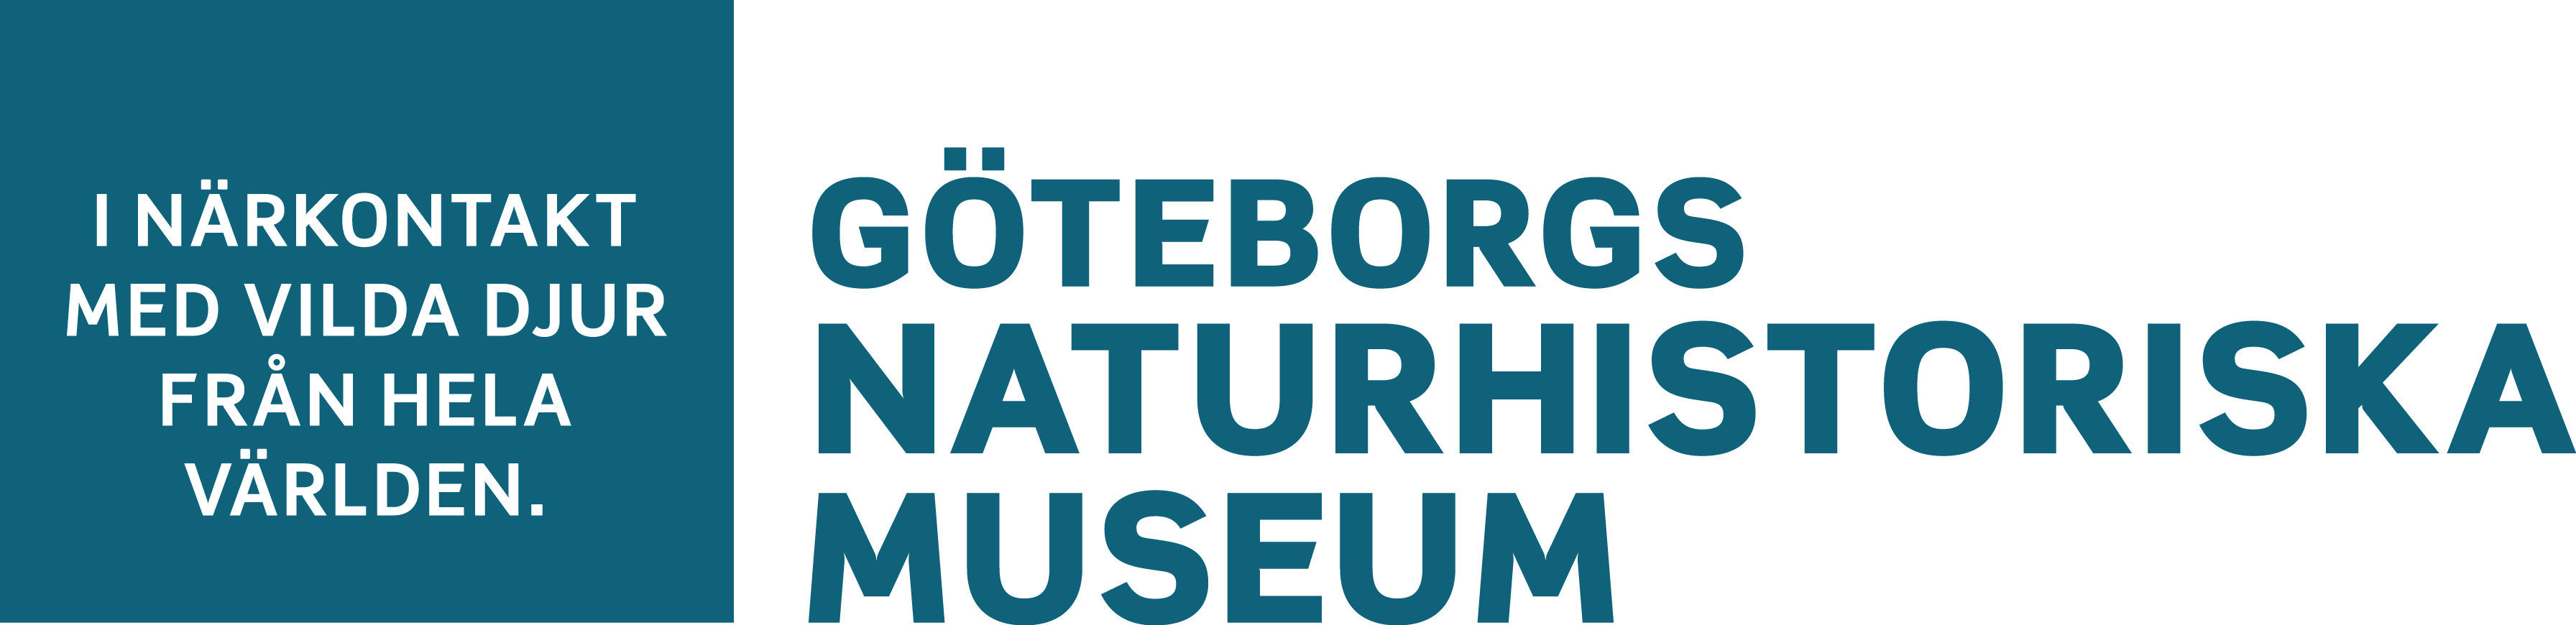 Göteborgs naturhistoriska museum